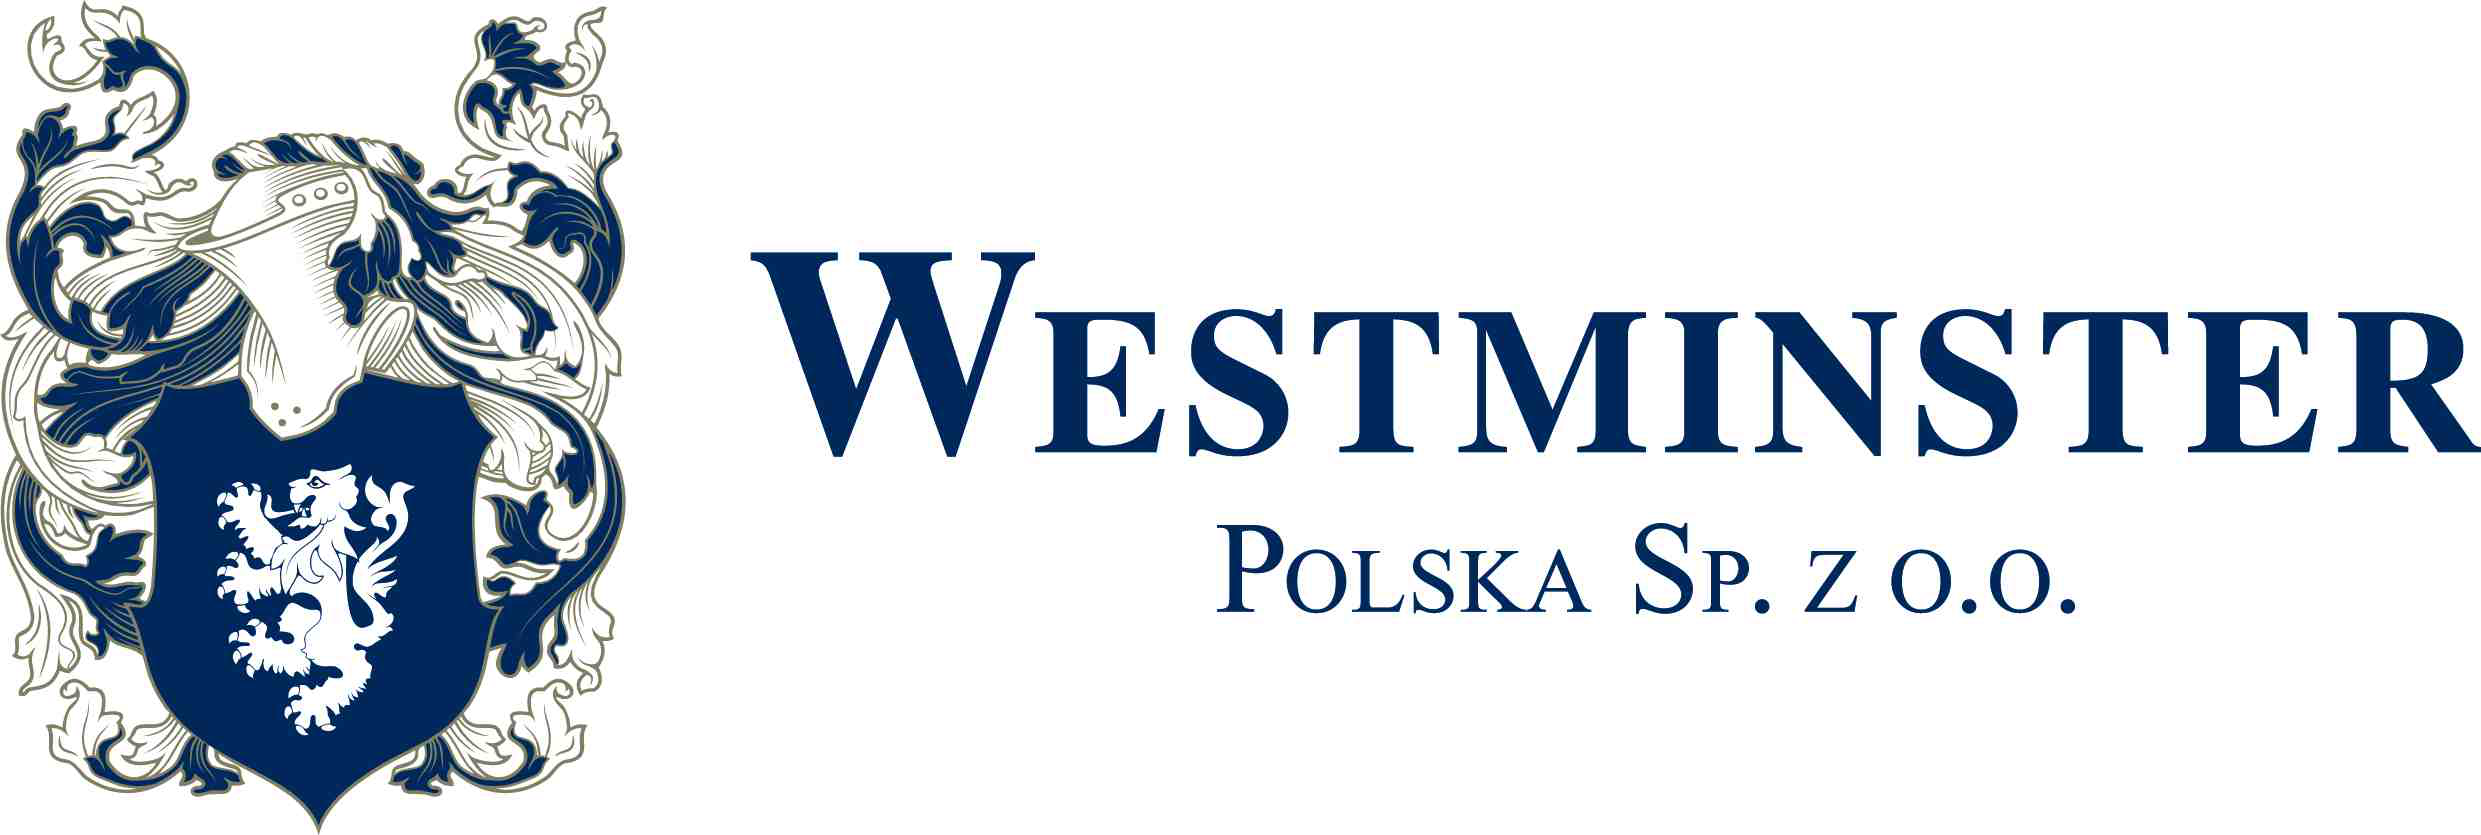 Logo_Westminster_Polska_horizontal_cmyk2.png